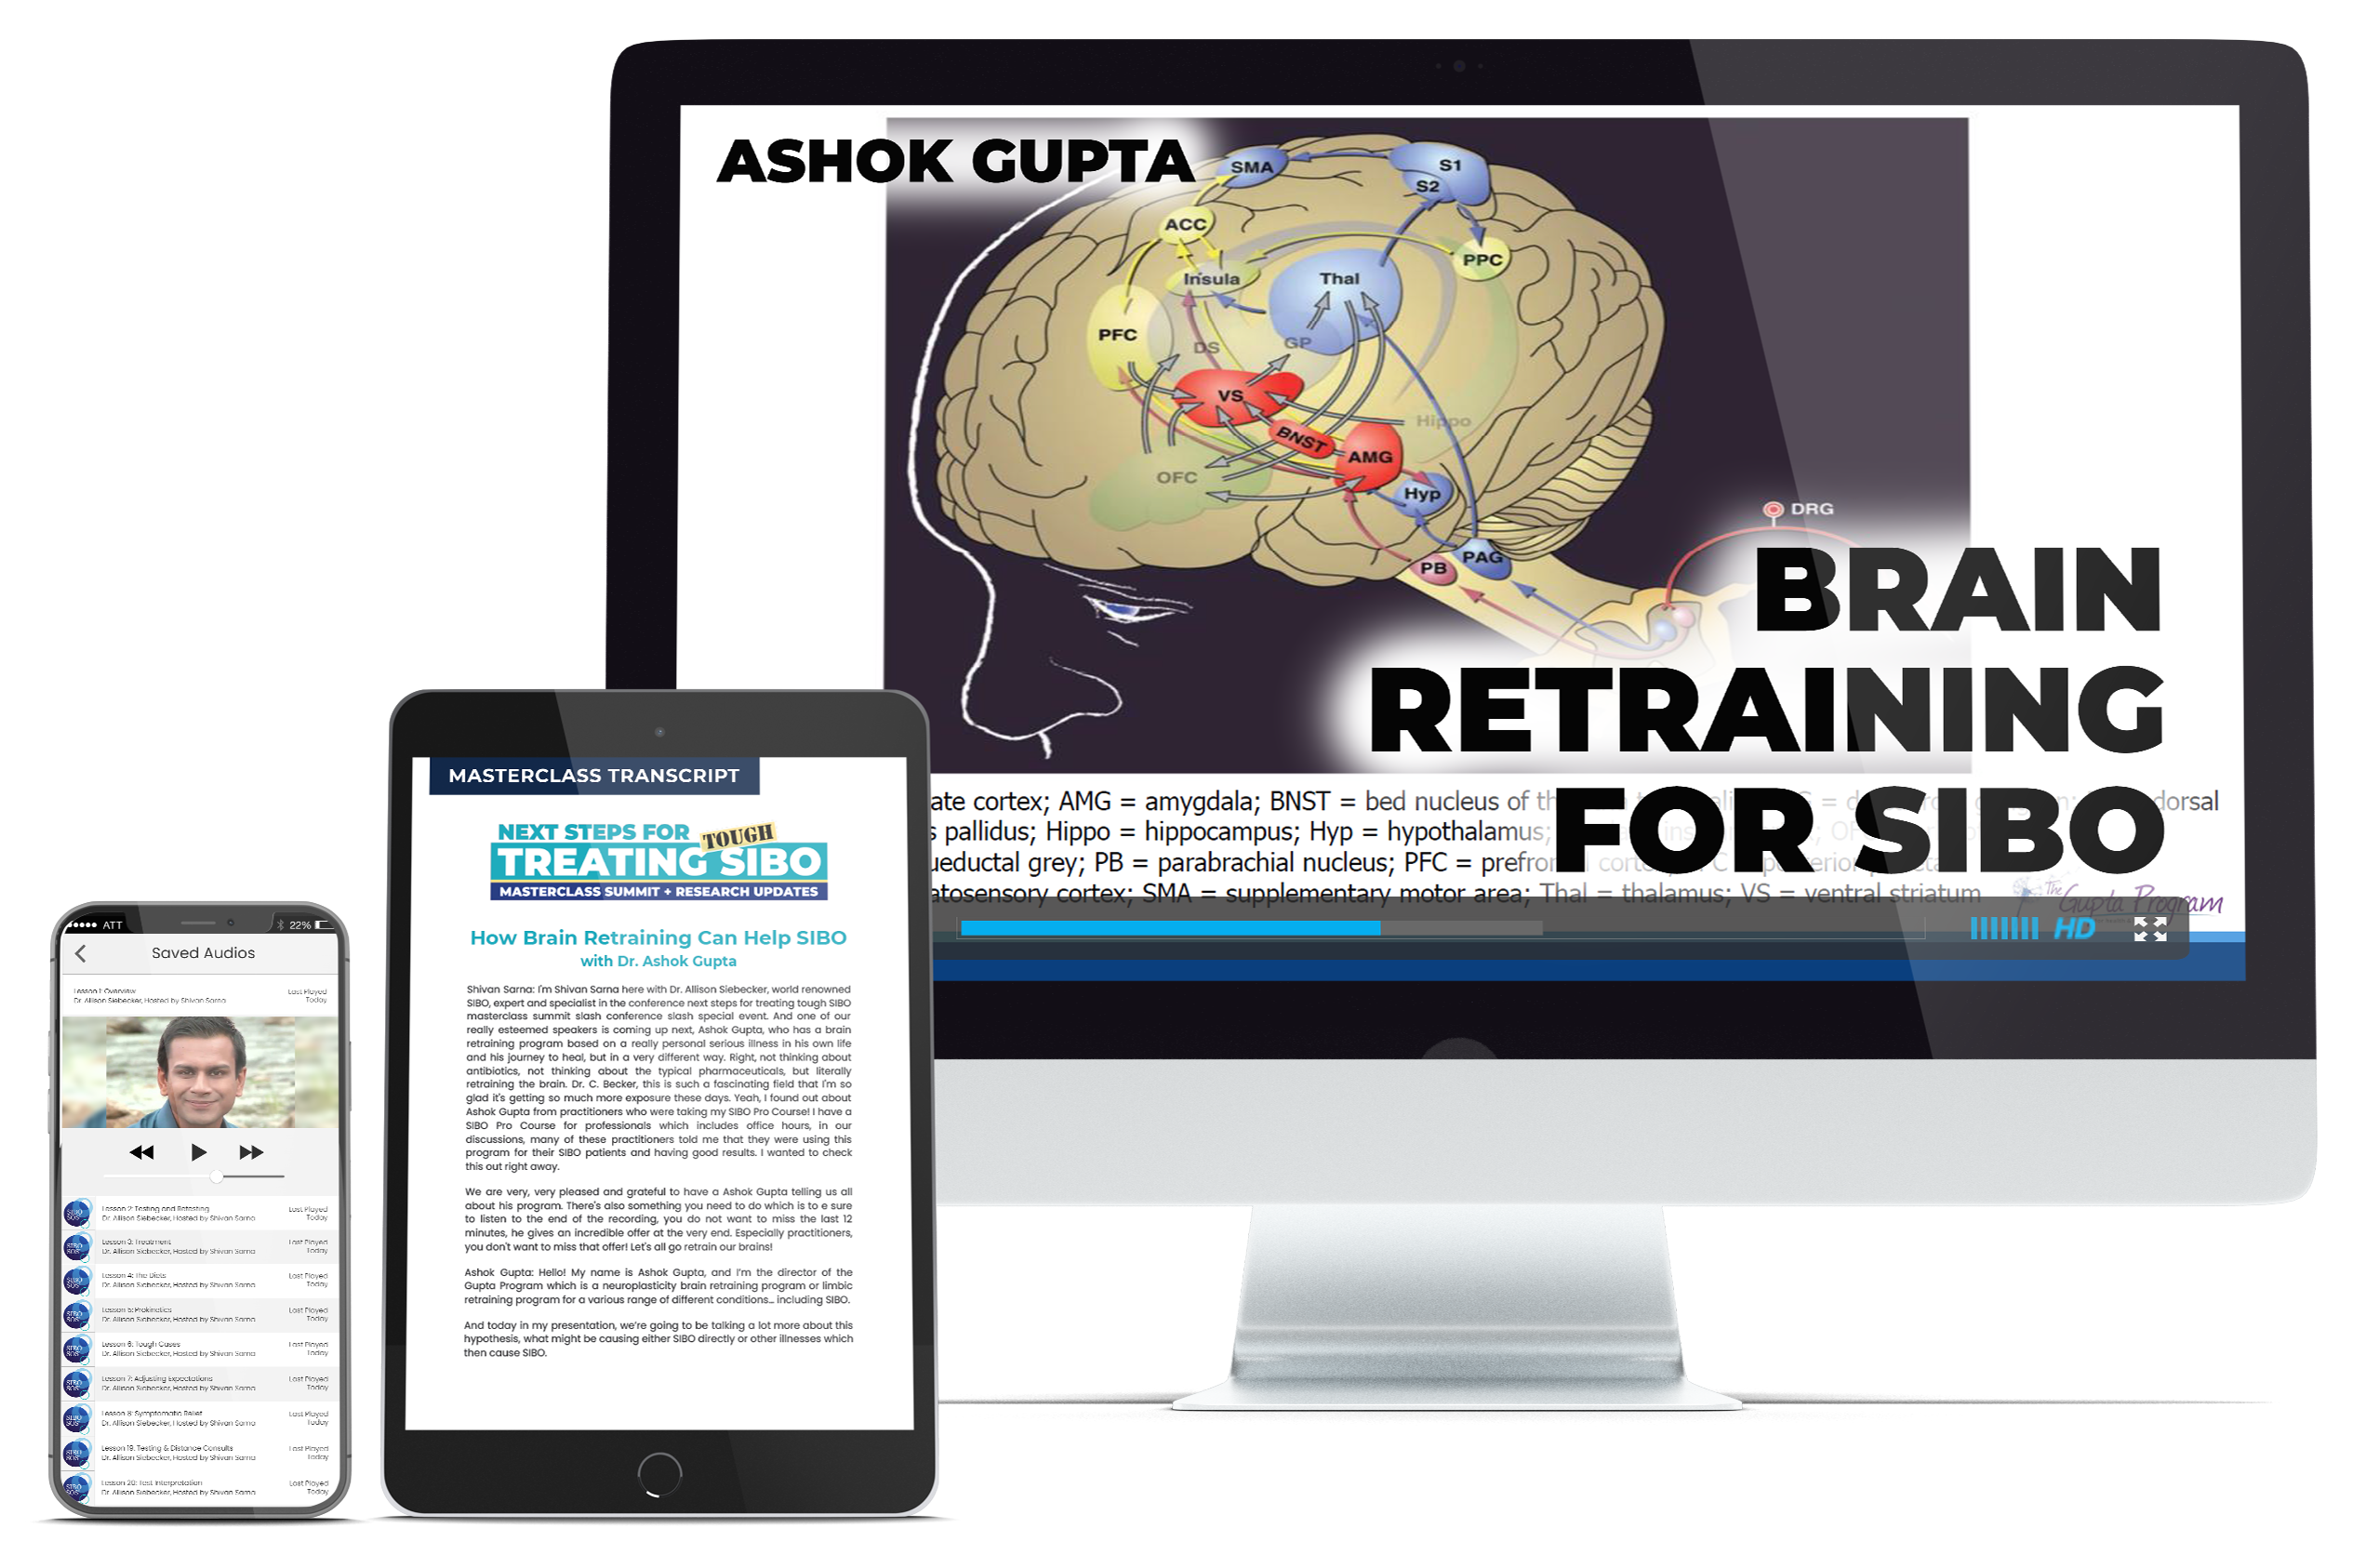 How Brain Retraining Can Help SIBO with Ashok Gupta ​​